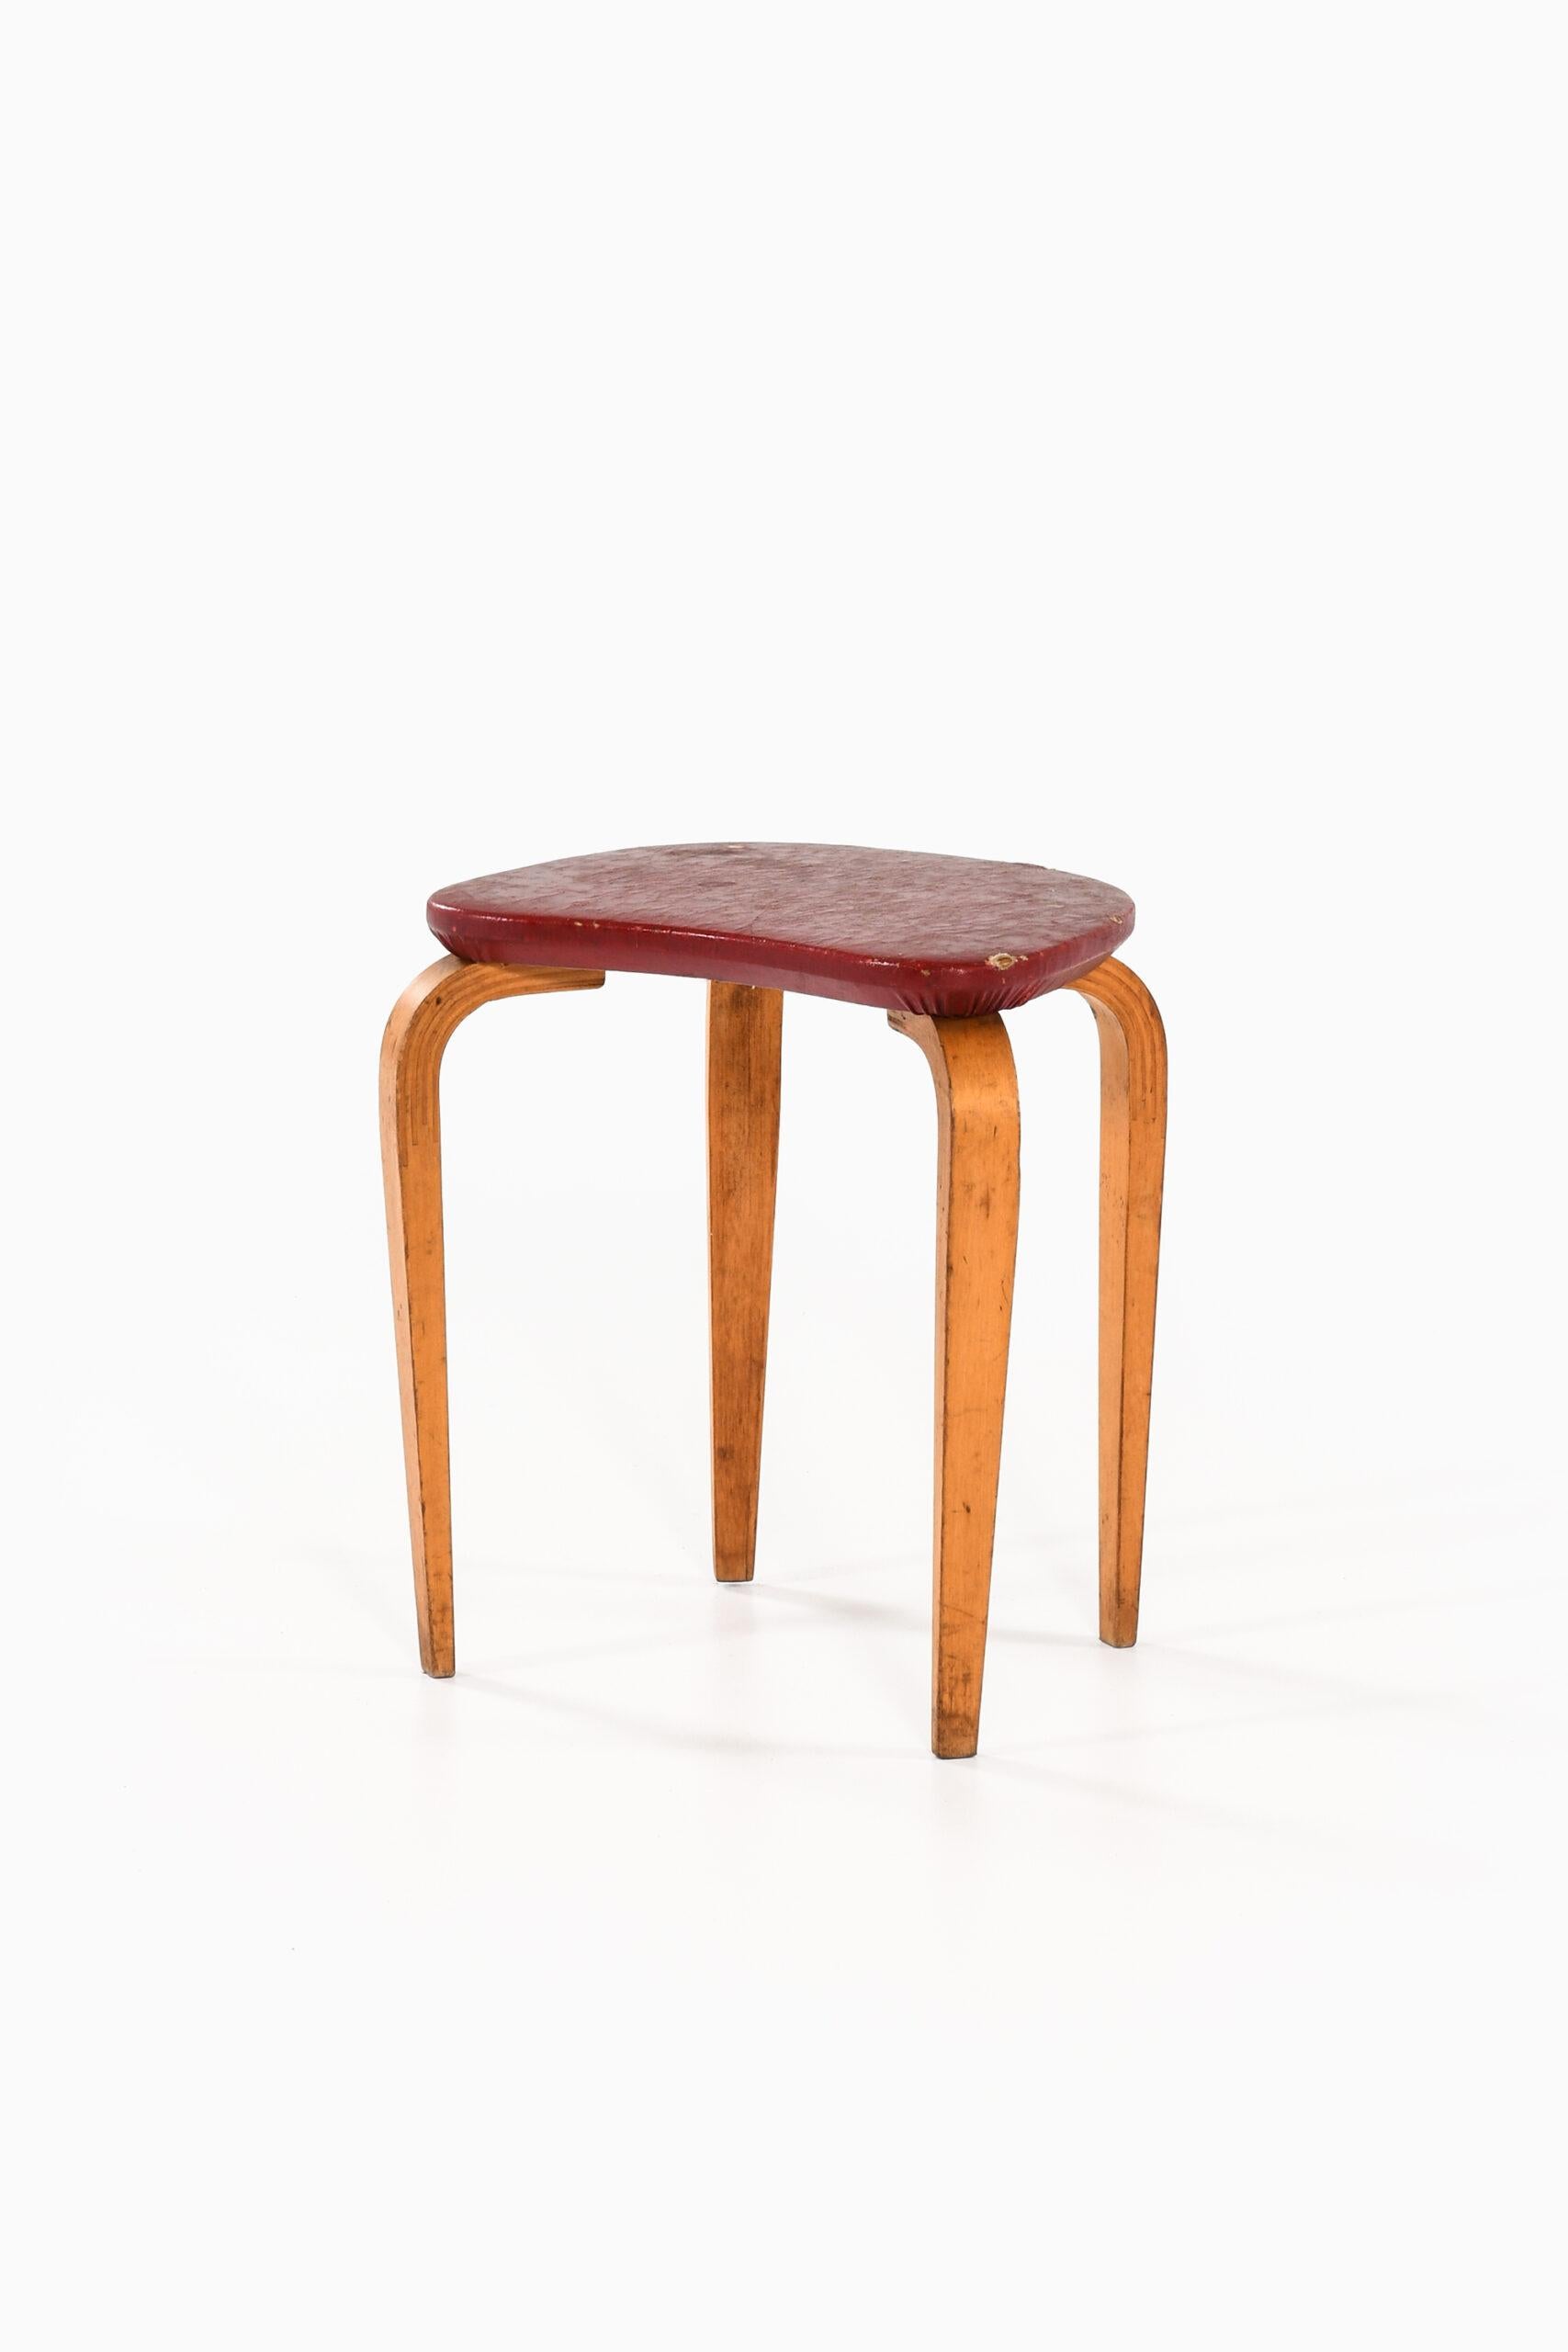 Rare stool by Gustav Axel Berg. Produced by Gustav Axel Berg (GA Berg) in Sweden.